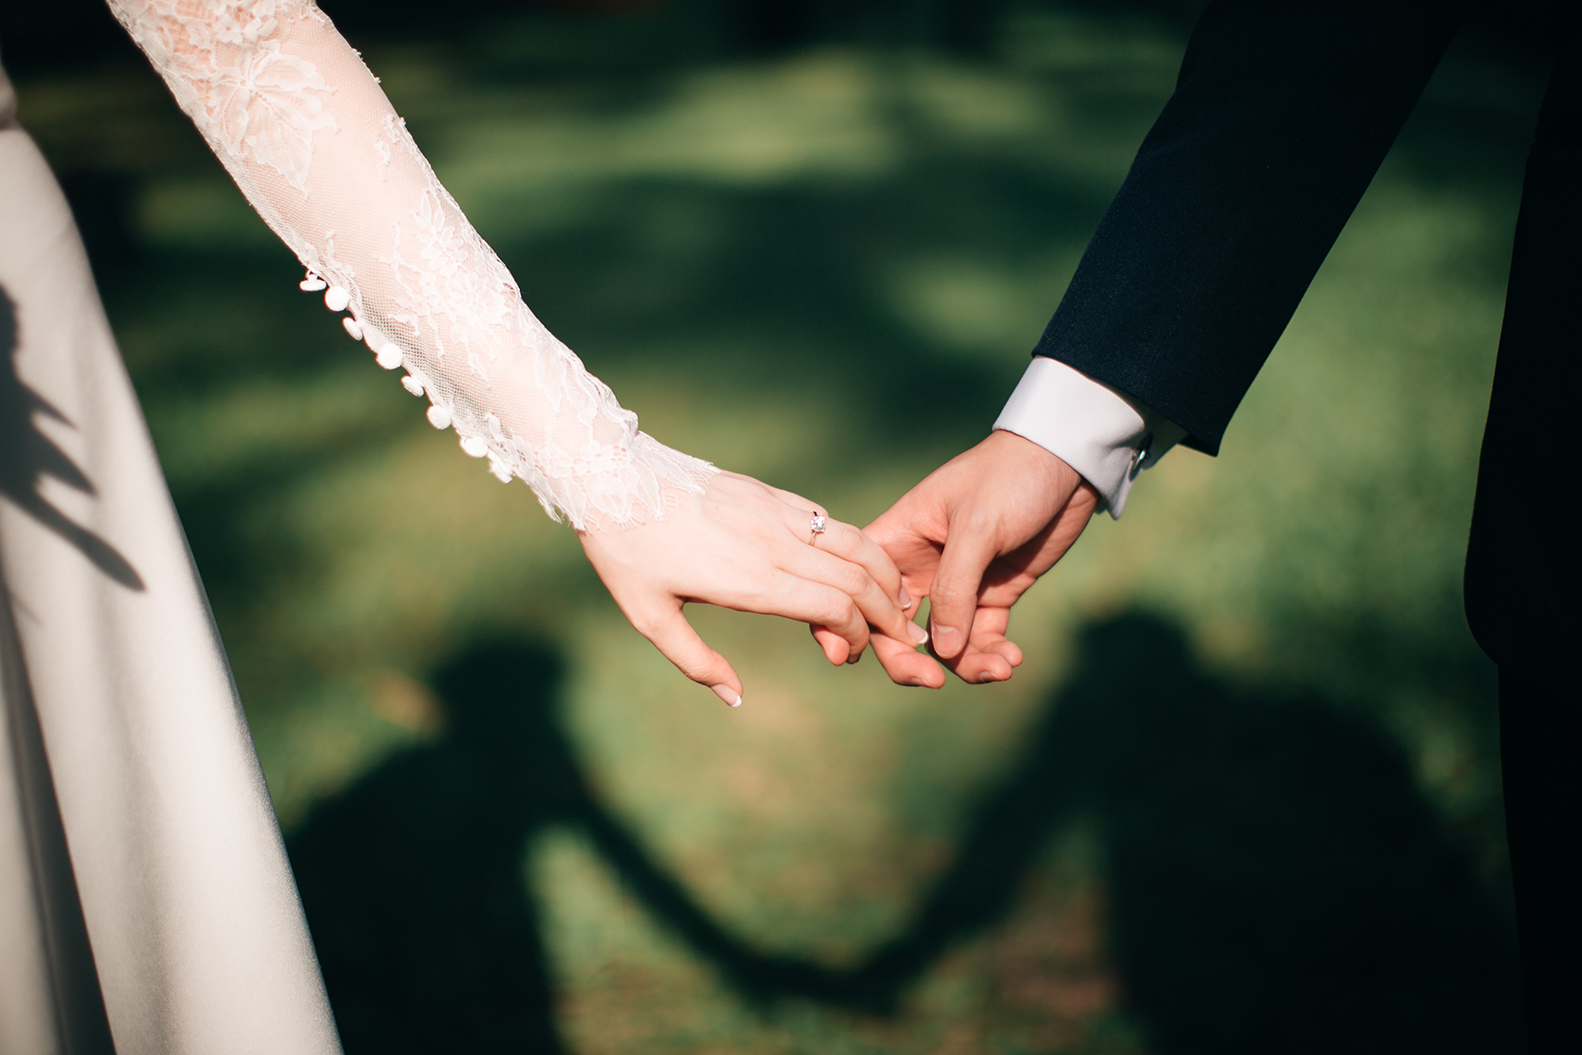 Wedding couple holding hands